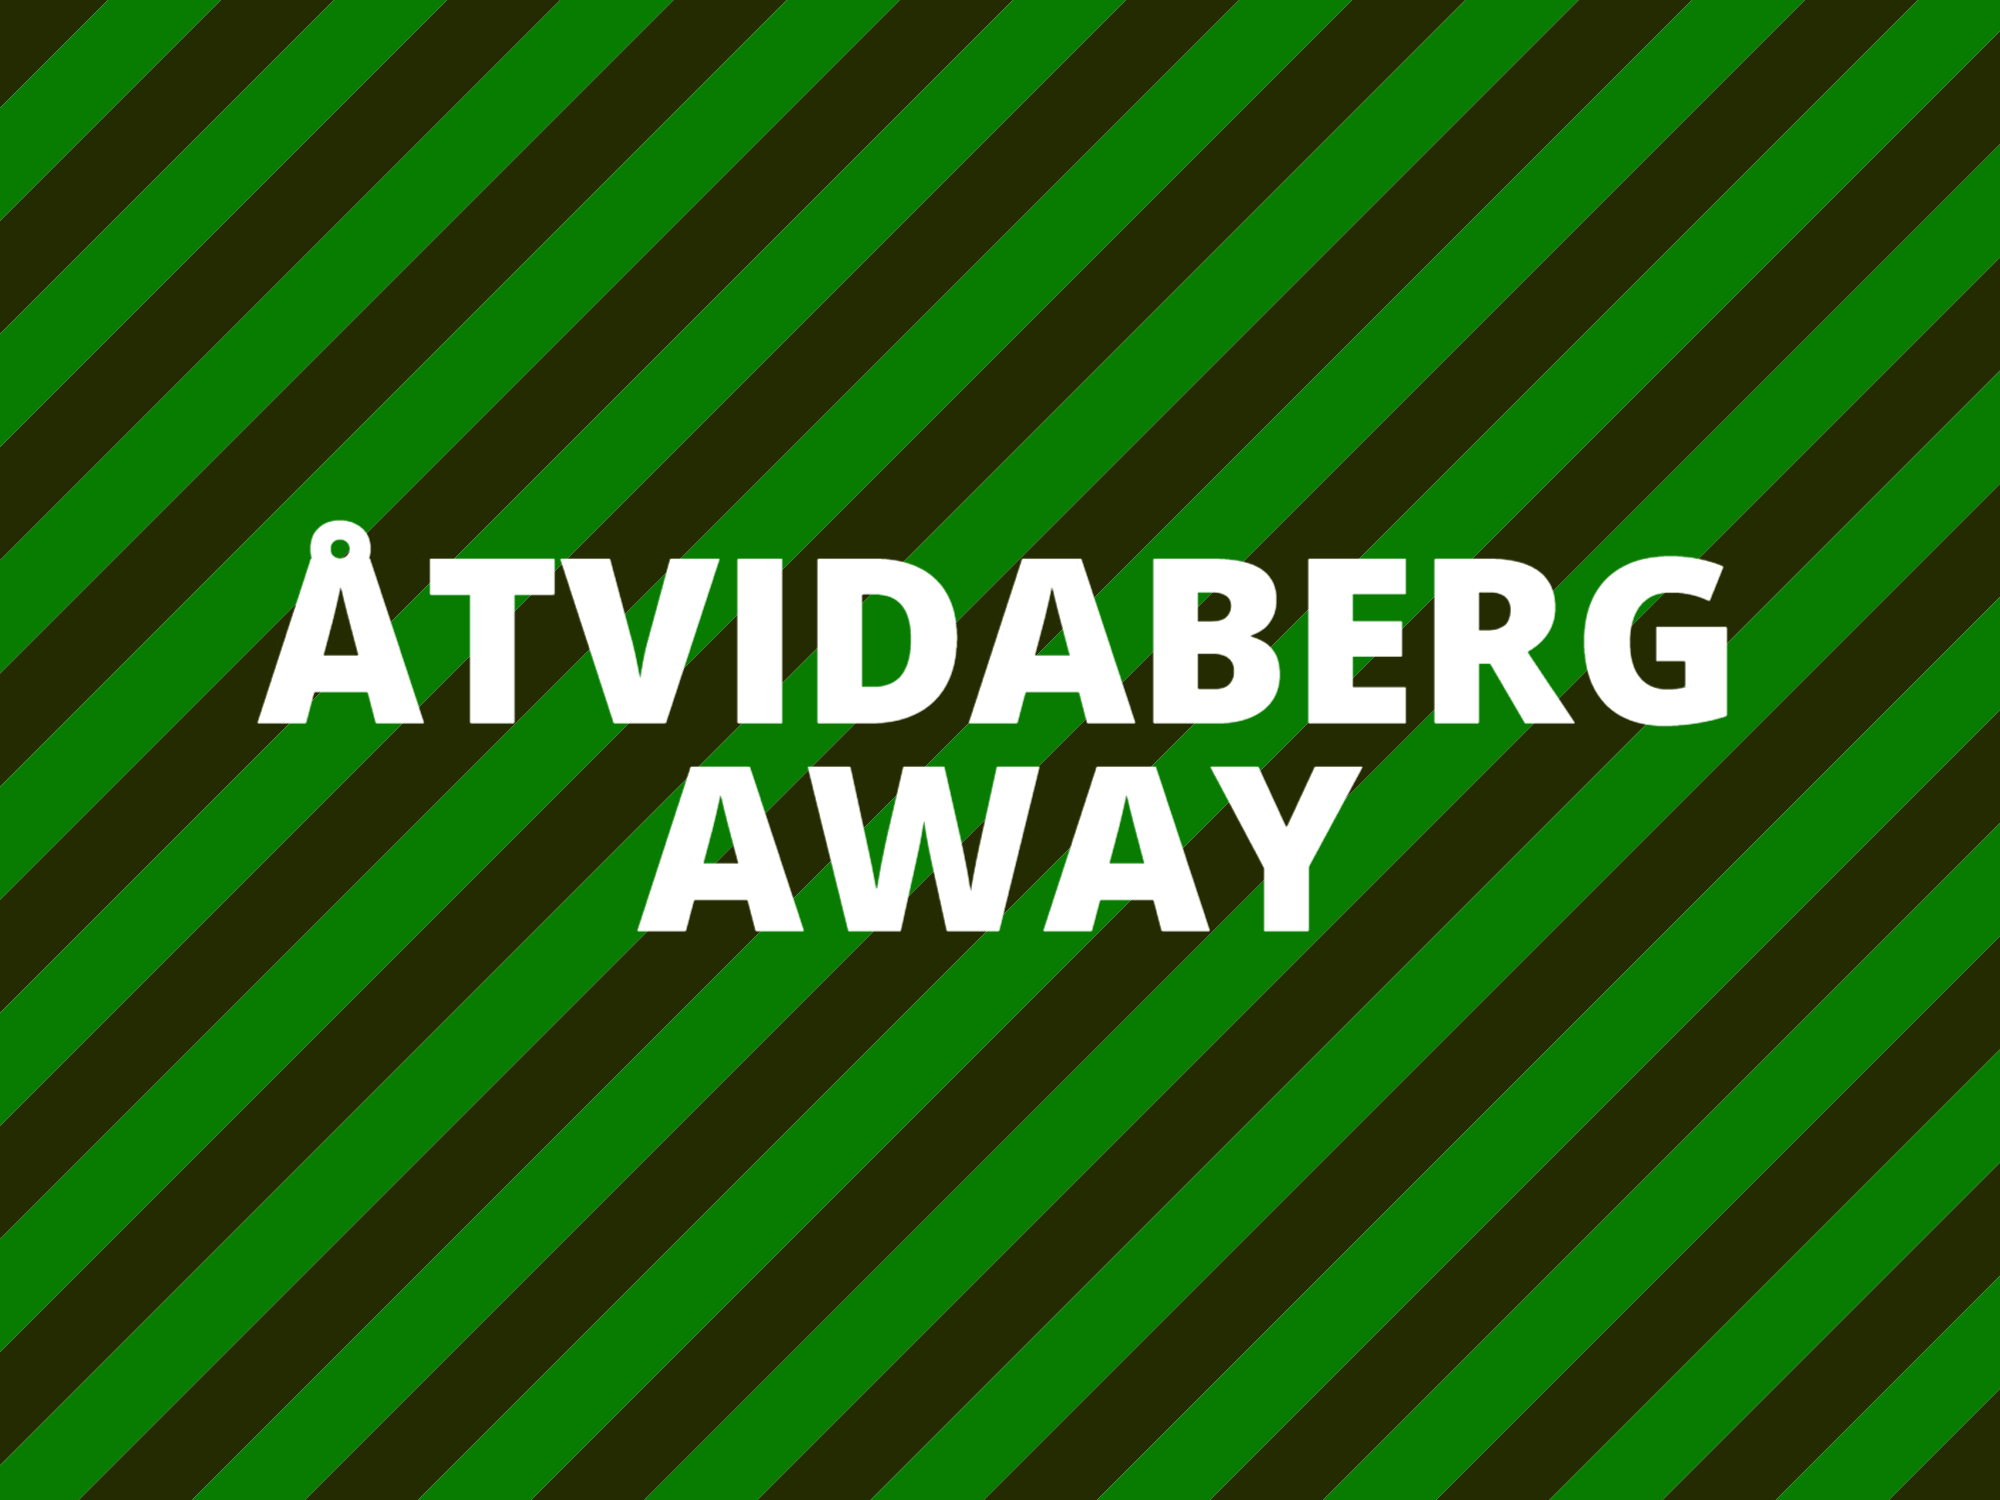 Åtvidaberg Away